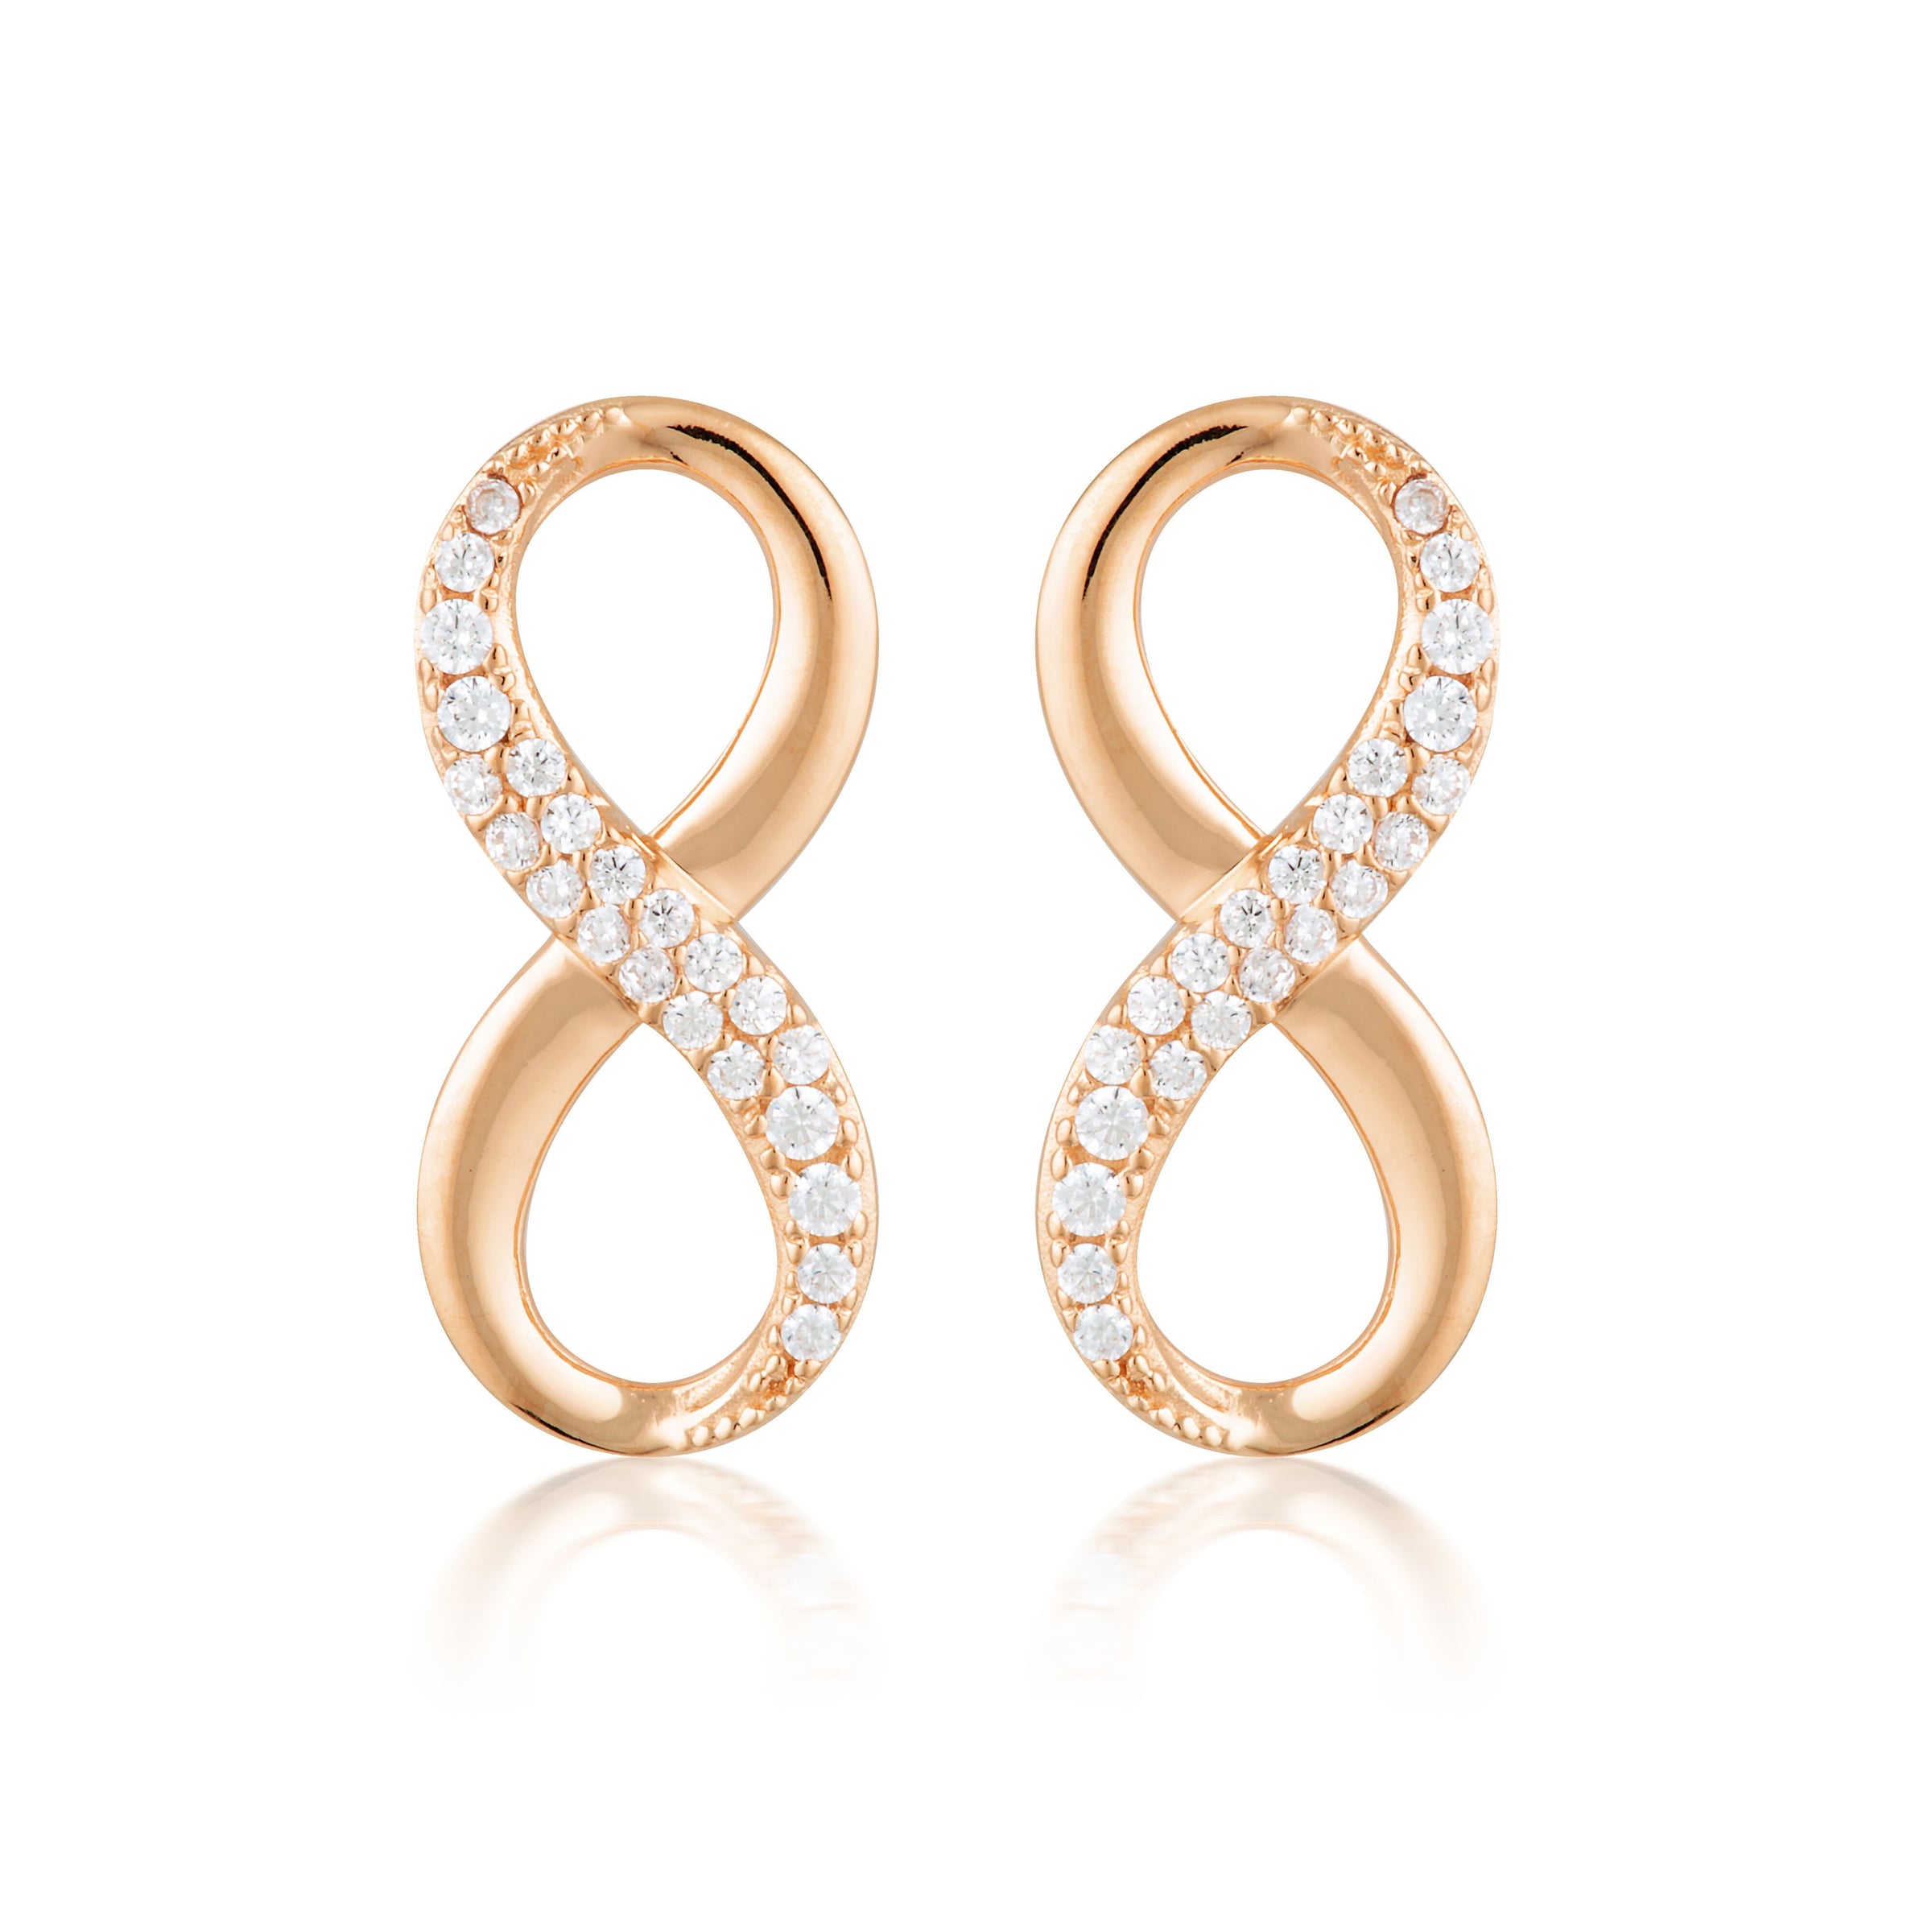 FOREVER INFINITY EARRINGS- ROSE GOLD Bevilles Jewellers 